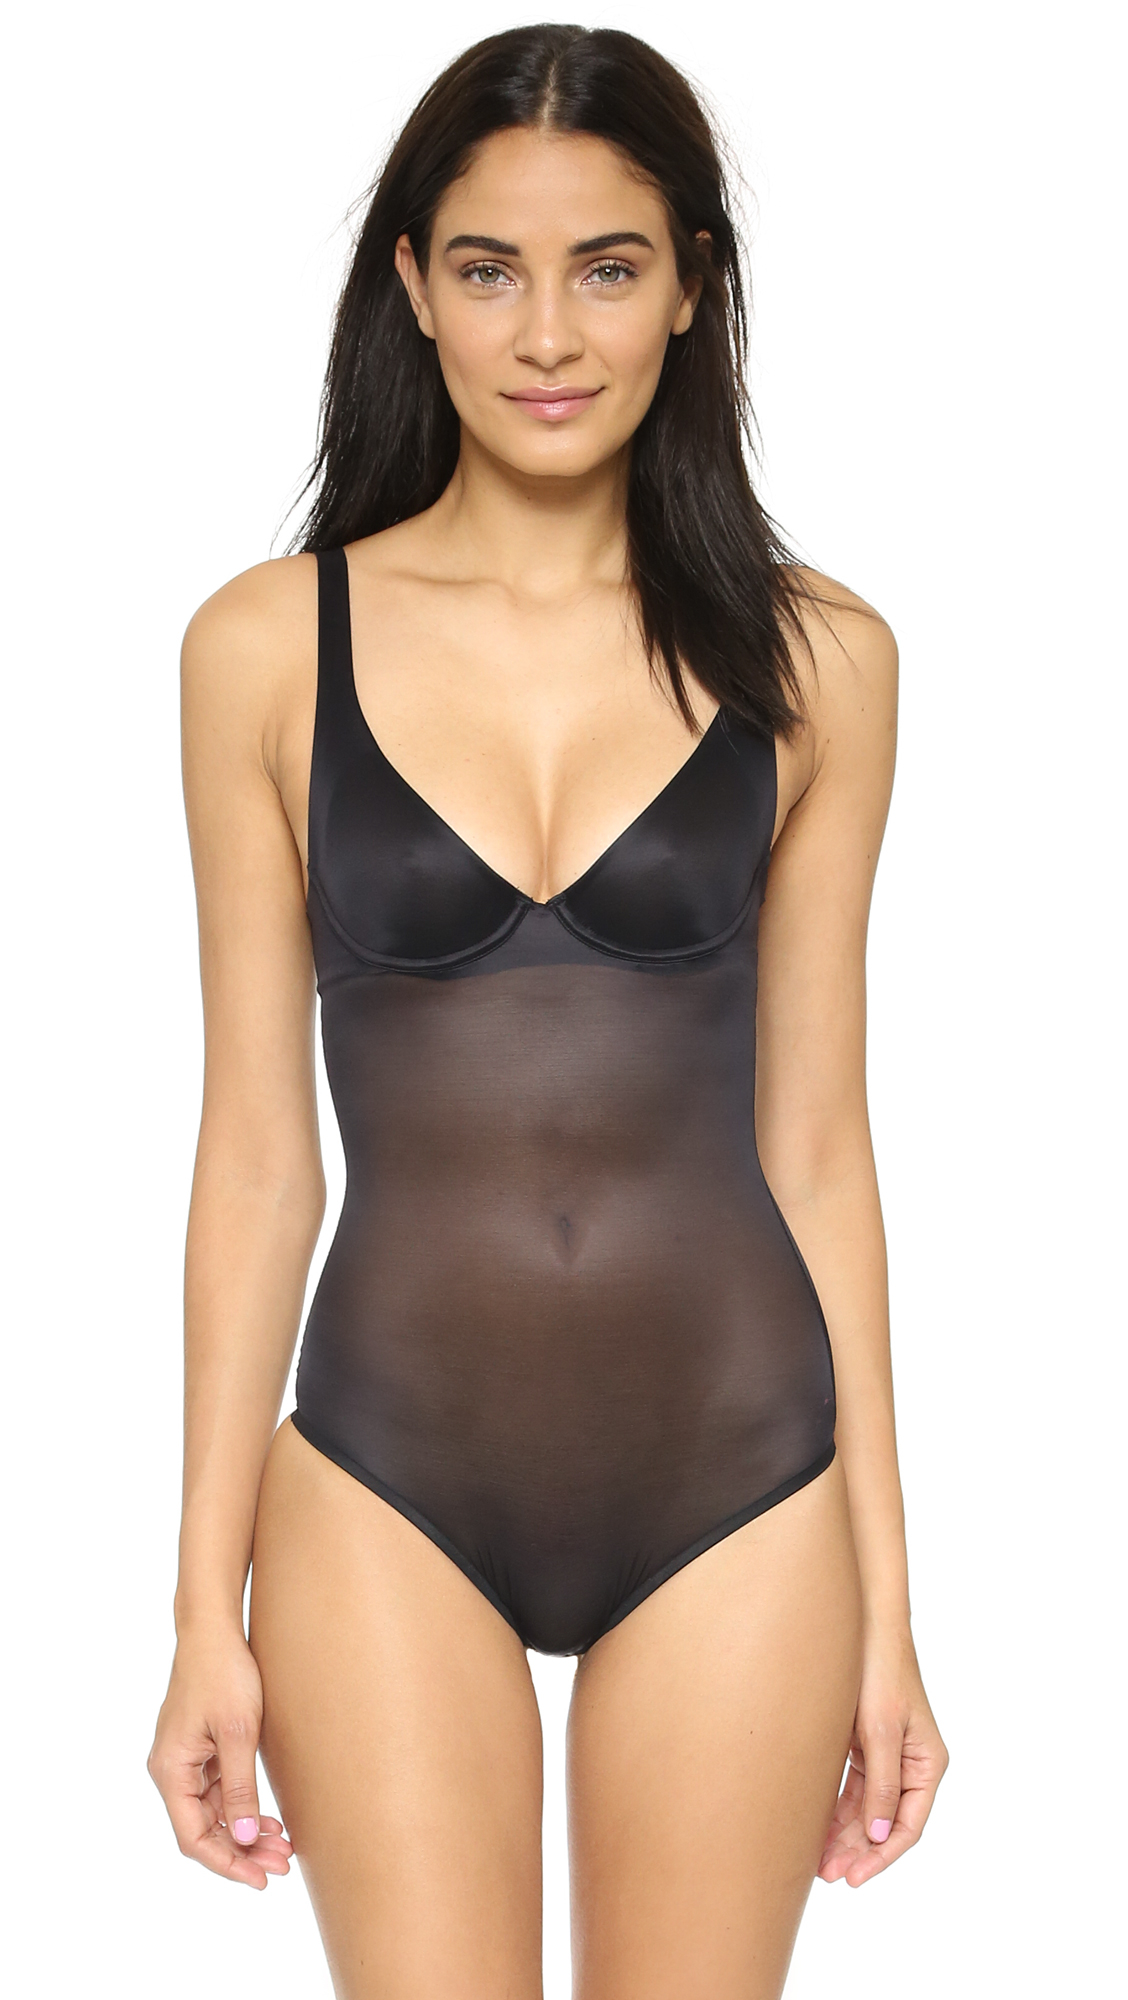 https://cdna.lystit.com/photos/81c2-2015/07/21/wolford-black-sheer-touch-string-bodysuit-black-product-0-663152555-normal.jpeg